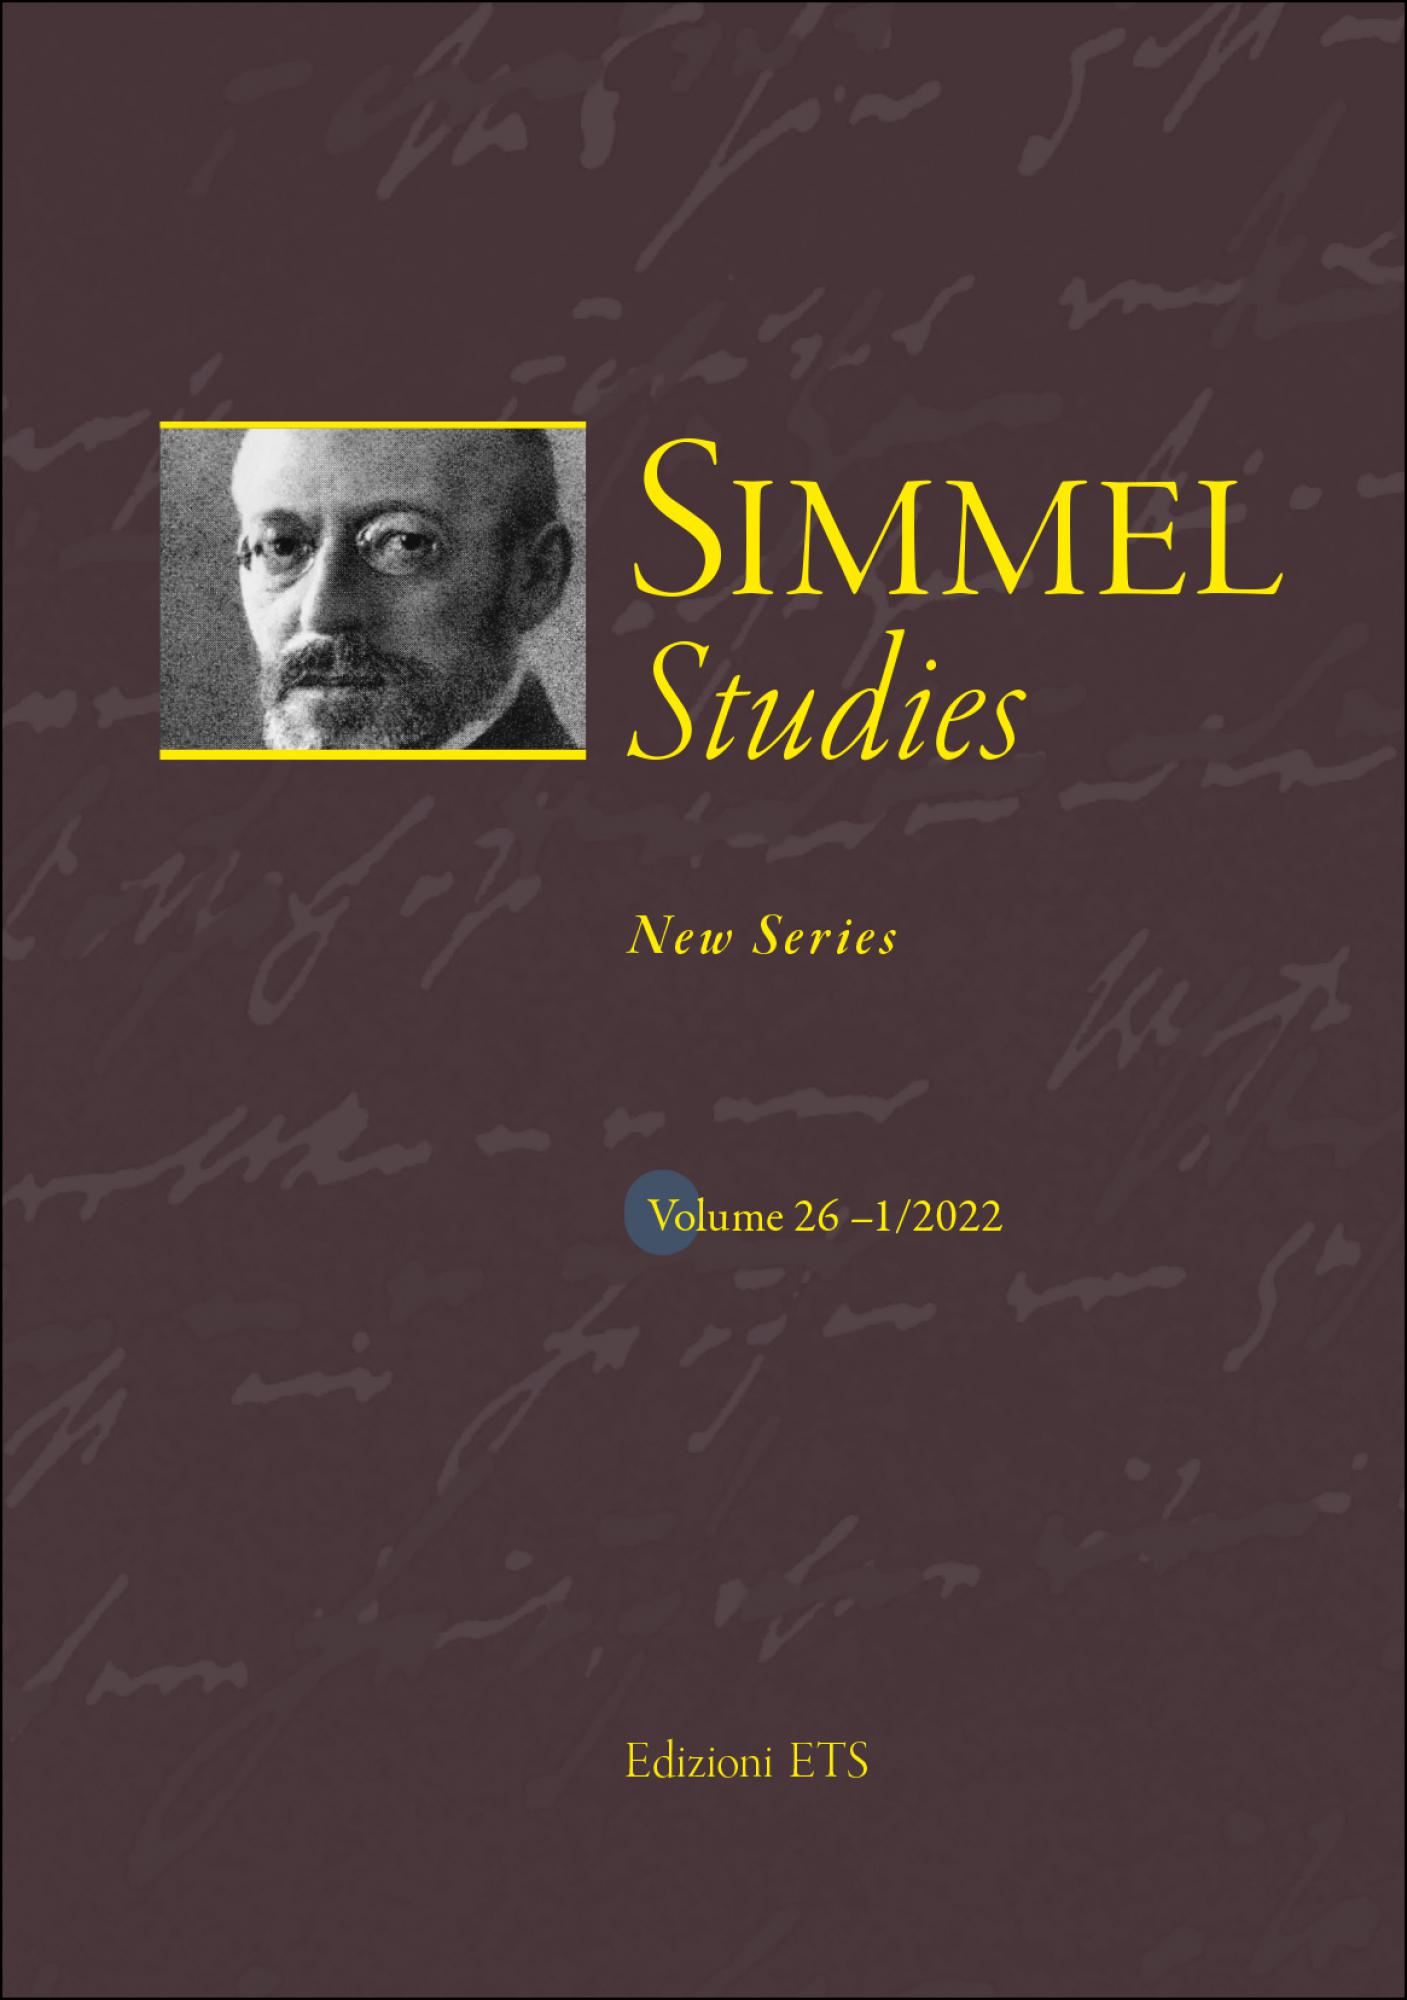 Simmel Studies 26-1/2022